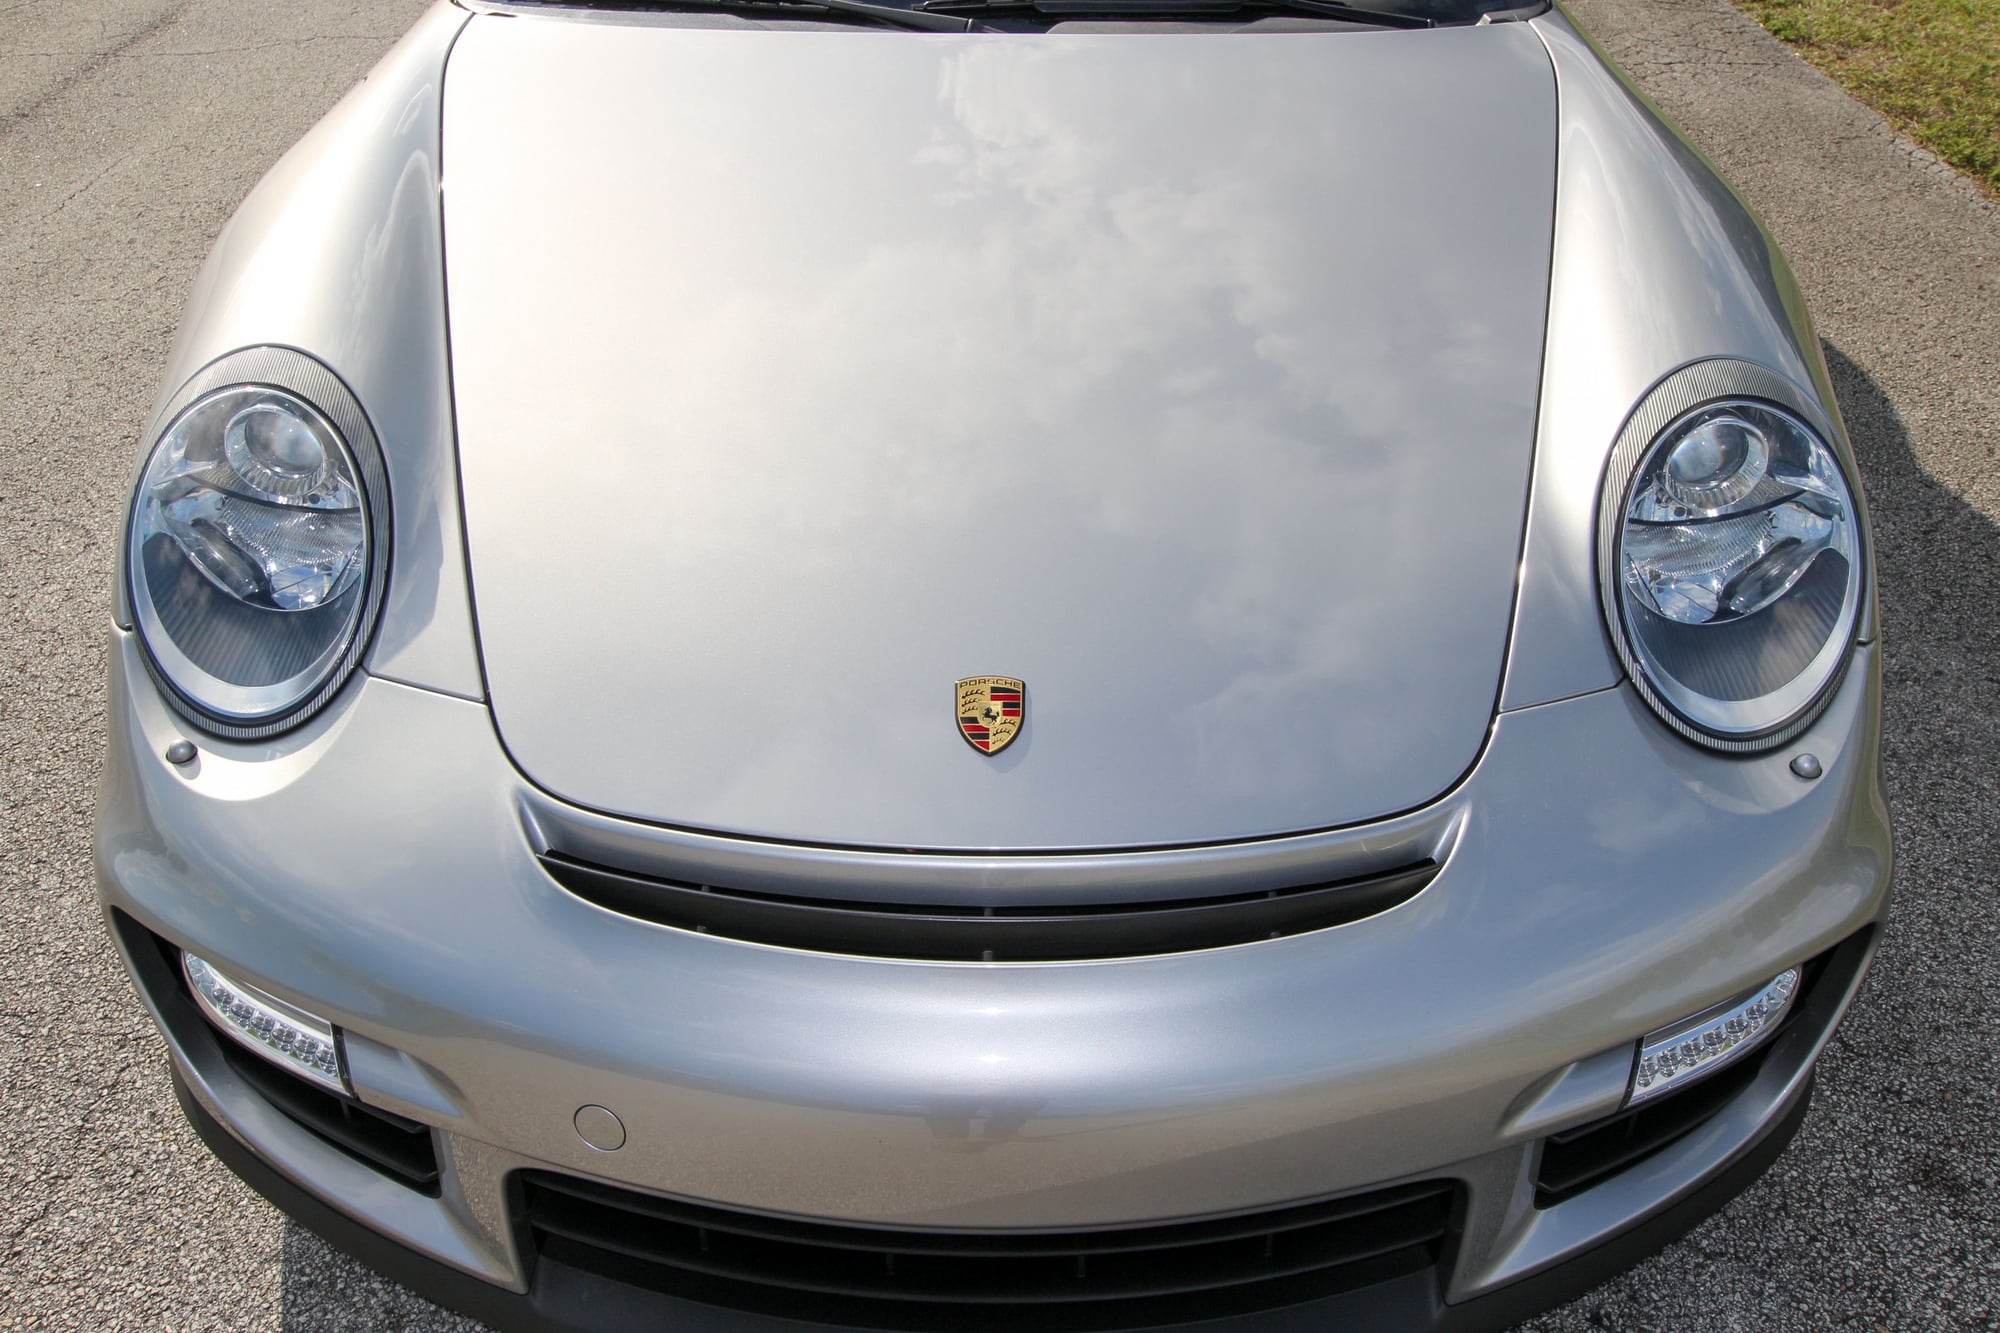 2008 Porsche 911 - 2008 Porsche 911 GT2 - 14,581 miles - Used - VIN WP0AD29958S796248 - 14,581 Miles - 6 cyl - 2WD - Manual - Coupe - Silver - Riviera Beach, FL 33407, United States